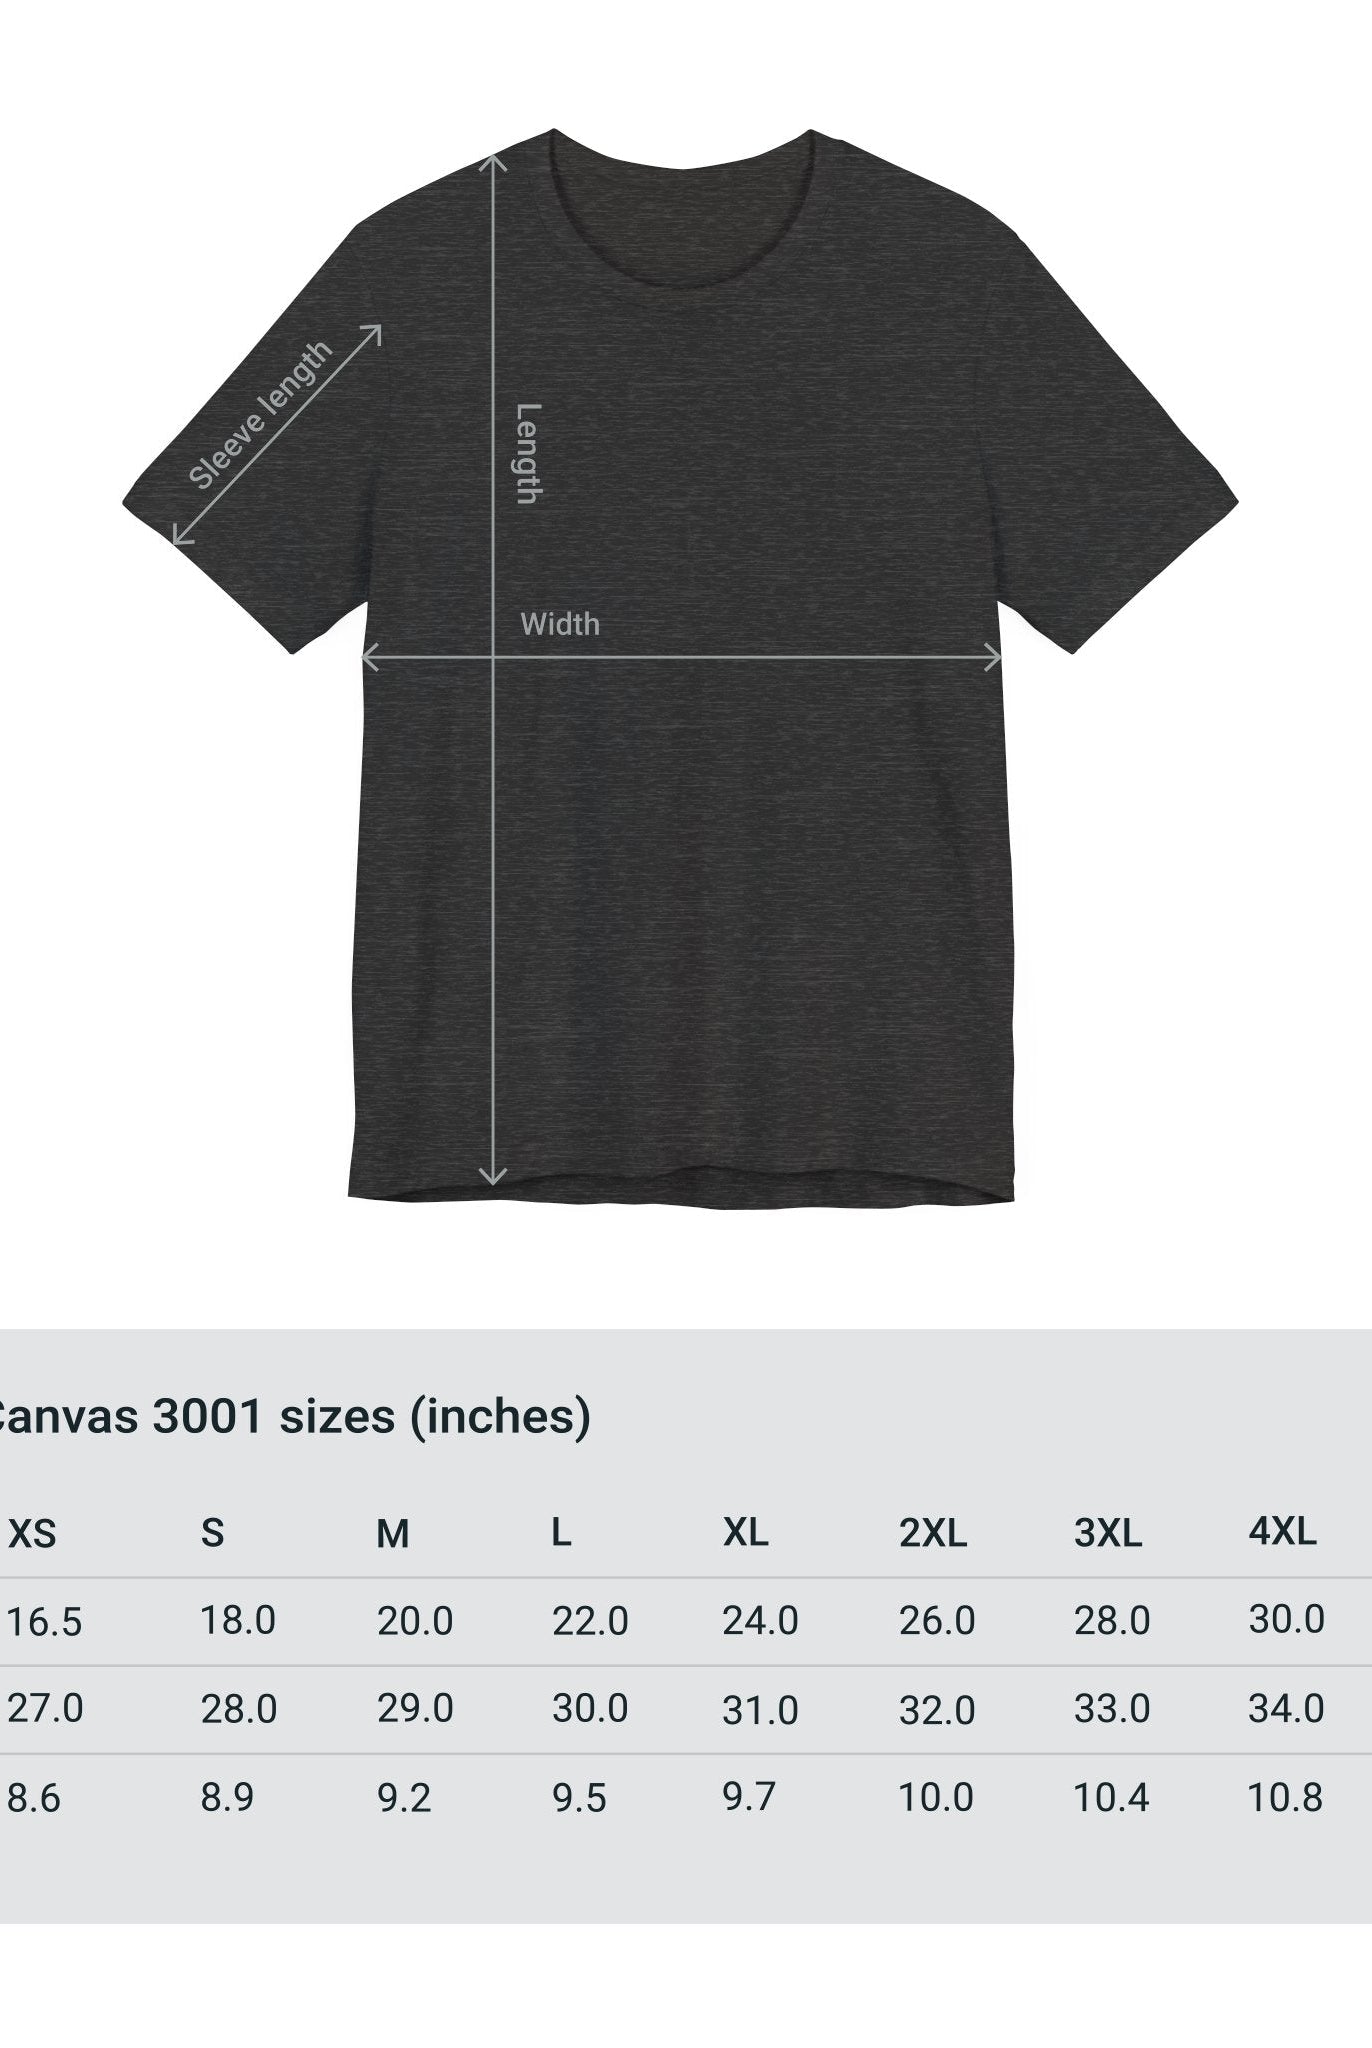 Adventure Unlimited Surfing T-Shirt black Bella & Canvas size measurements printed direct-to-garment EU